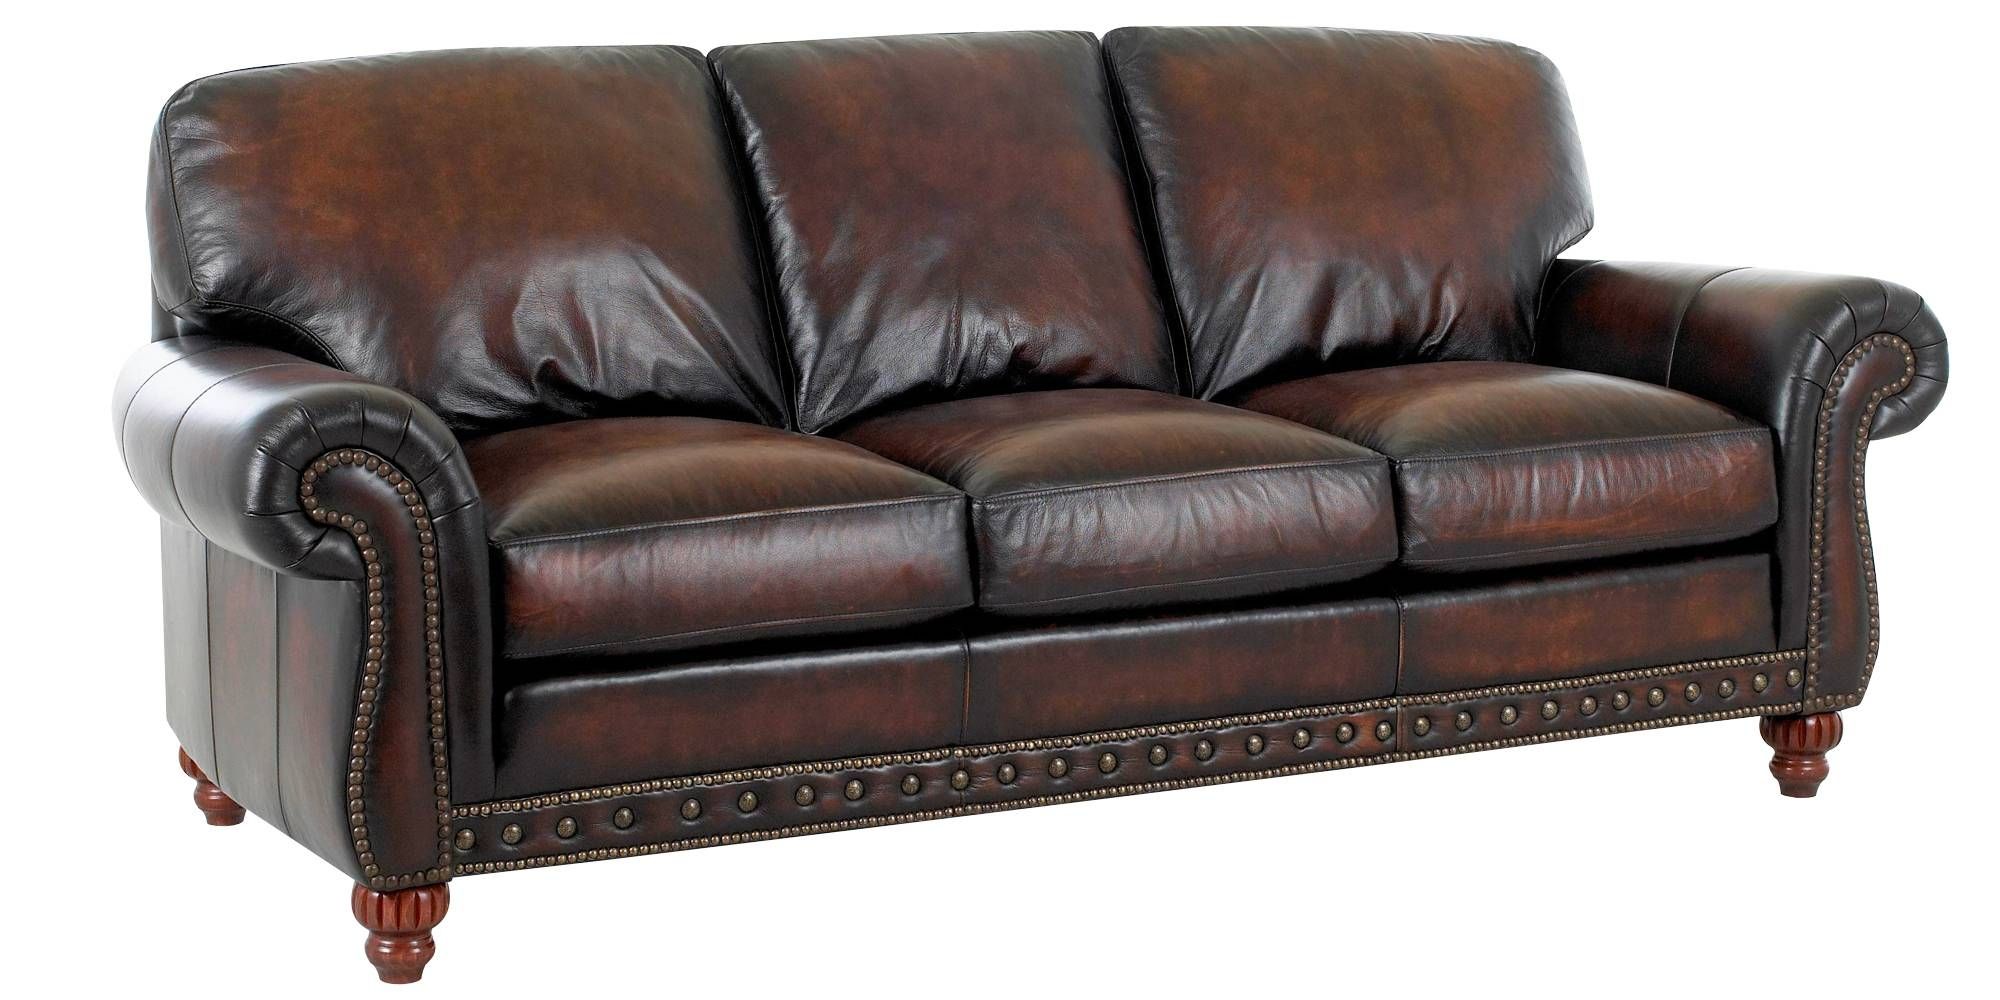 houzz photos contemporary leather european sofa